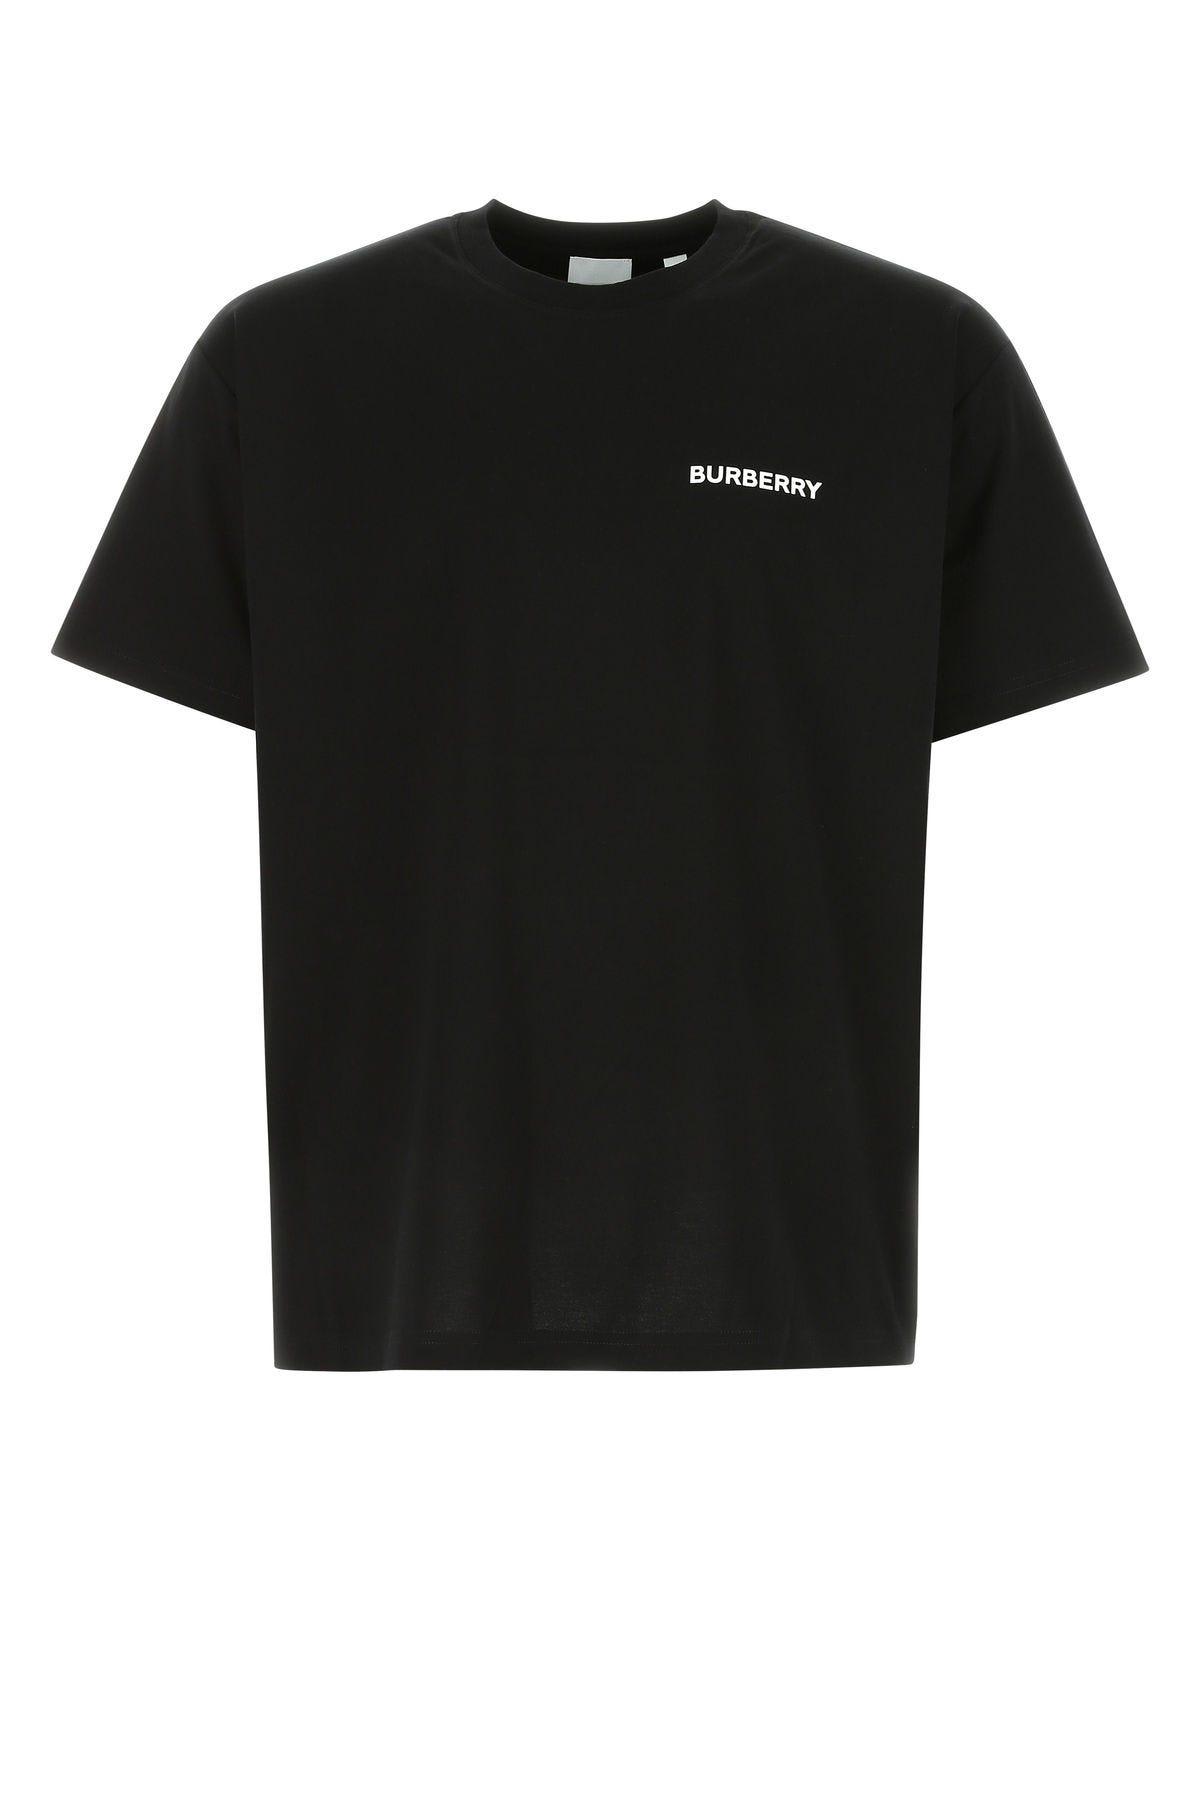 Burberry Black Cotton Oversize T-shirt